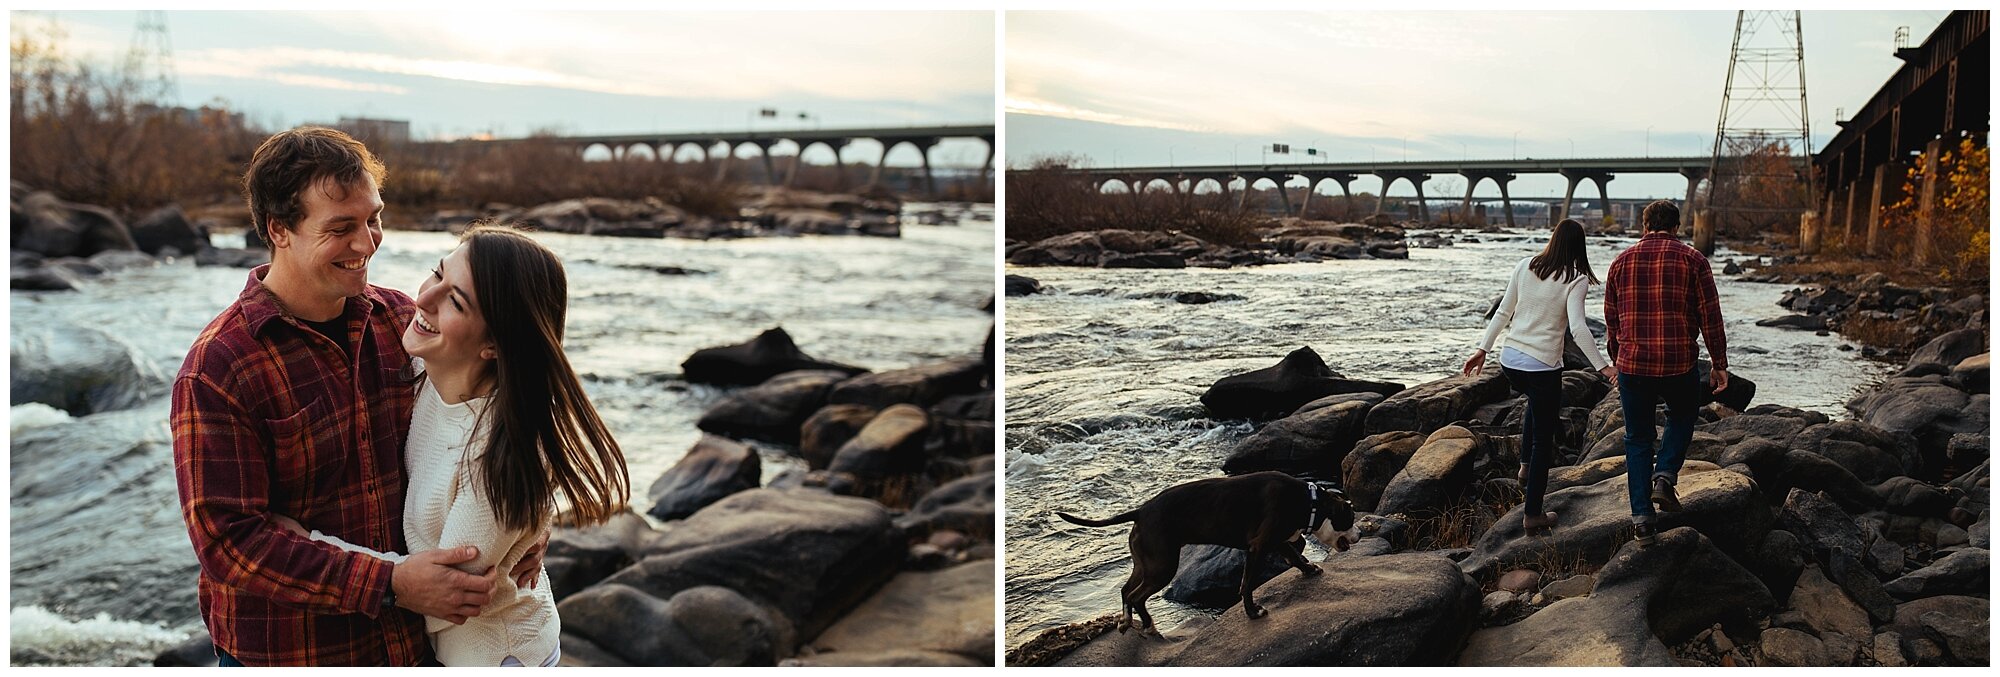 Engaged couple exploring the James River with pet dog RVA Shawnee Custalow photography